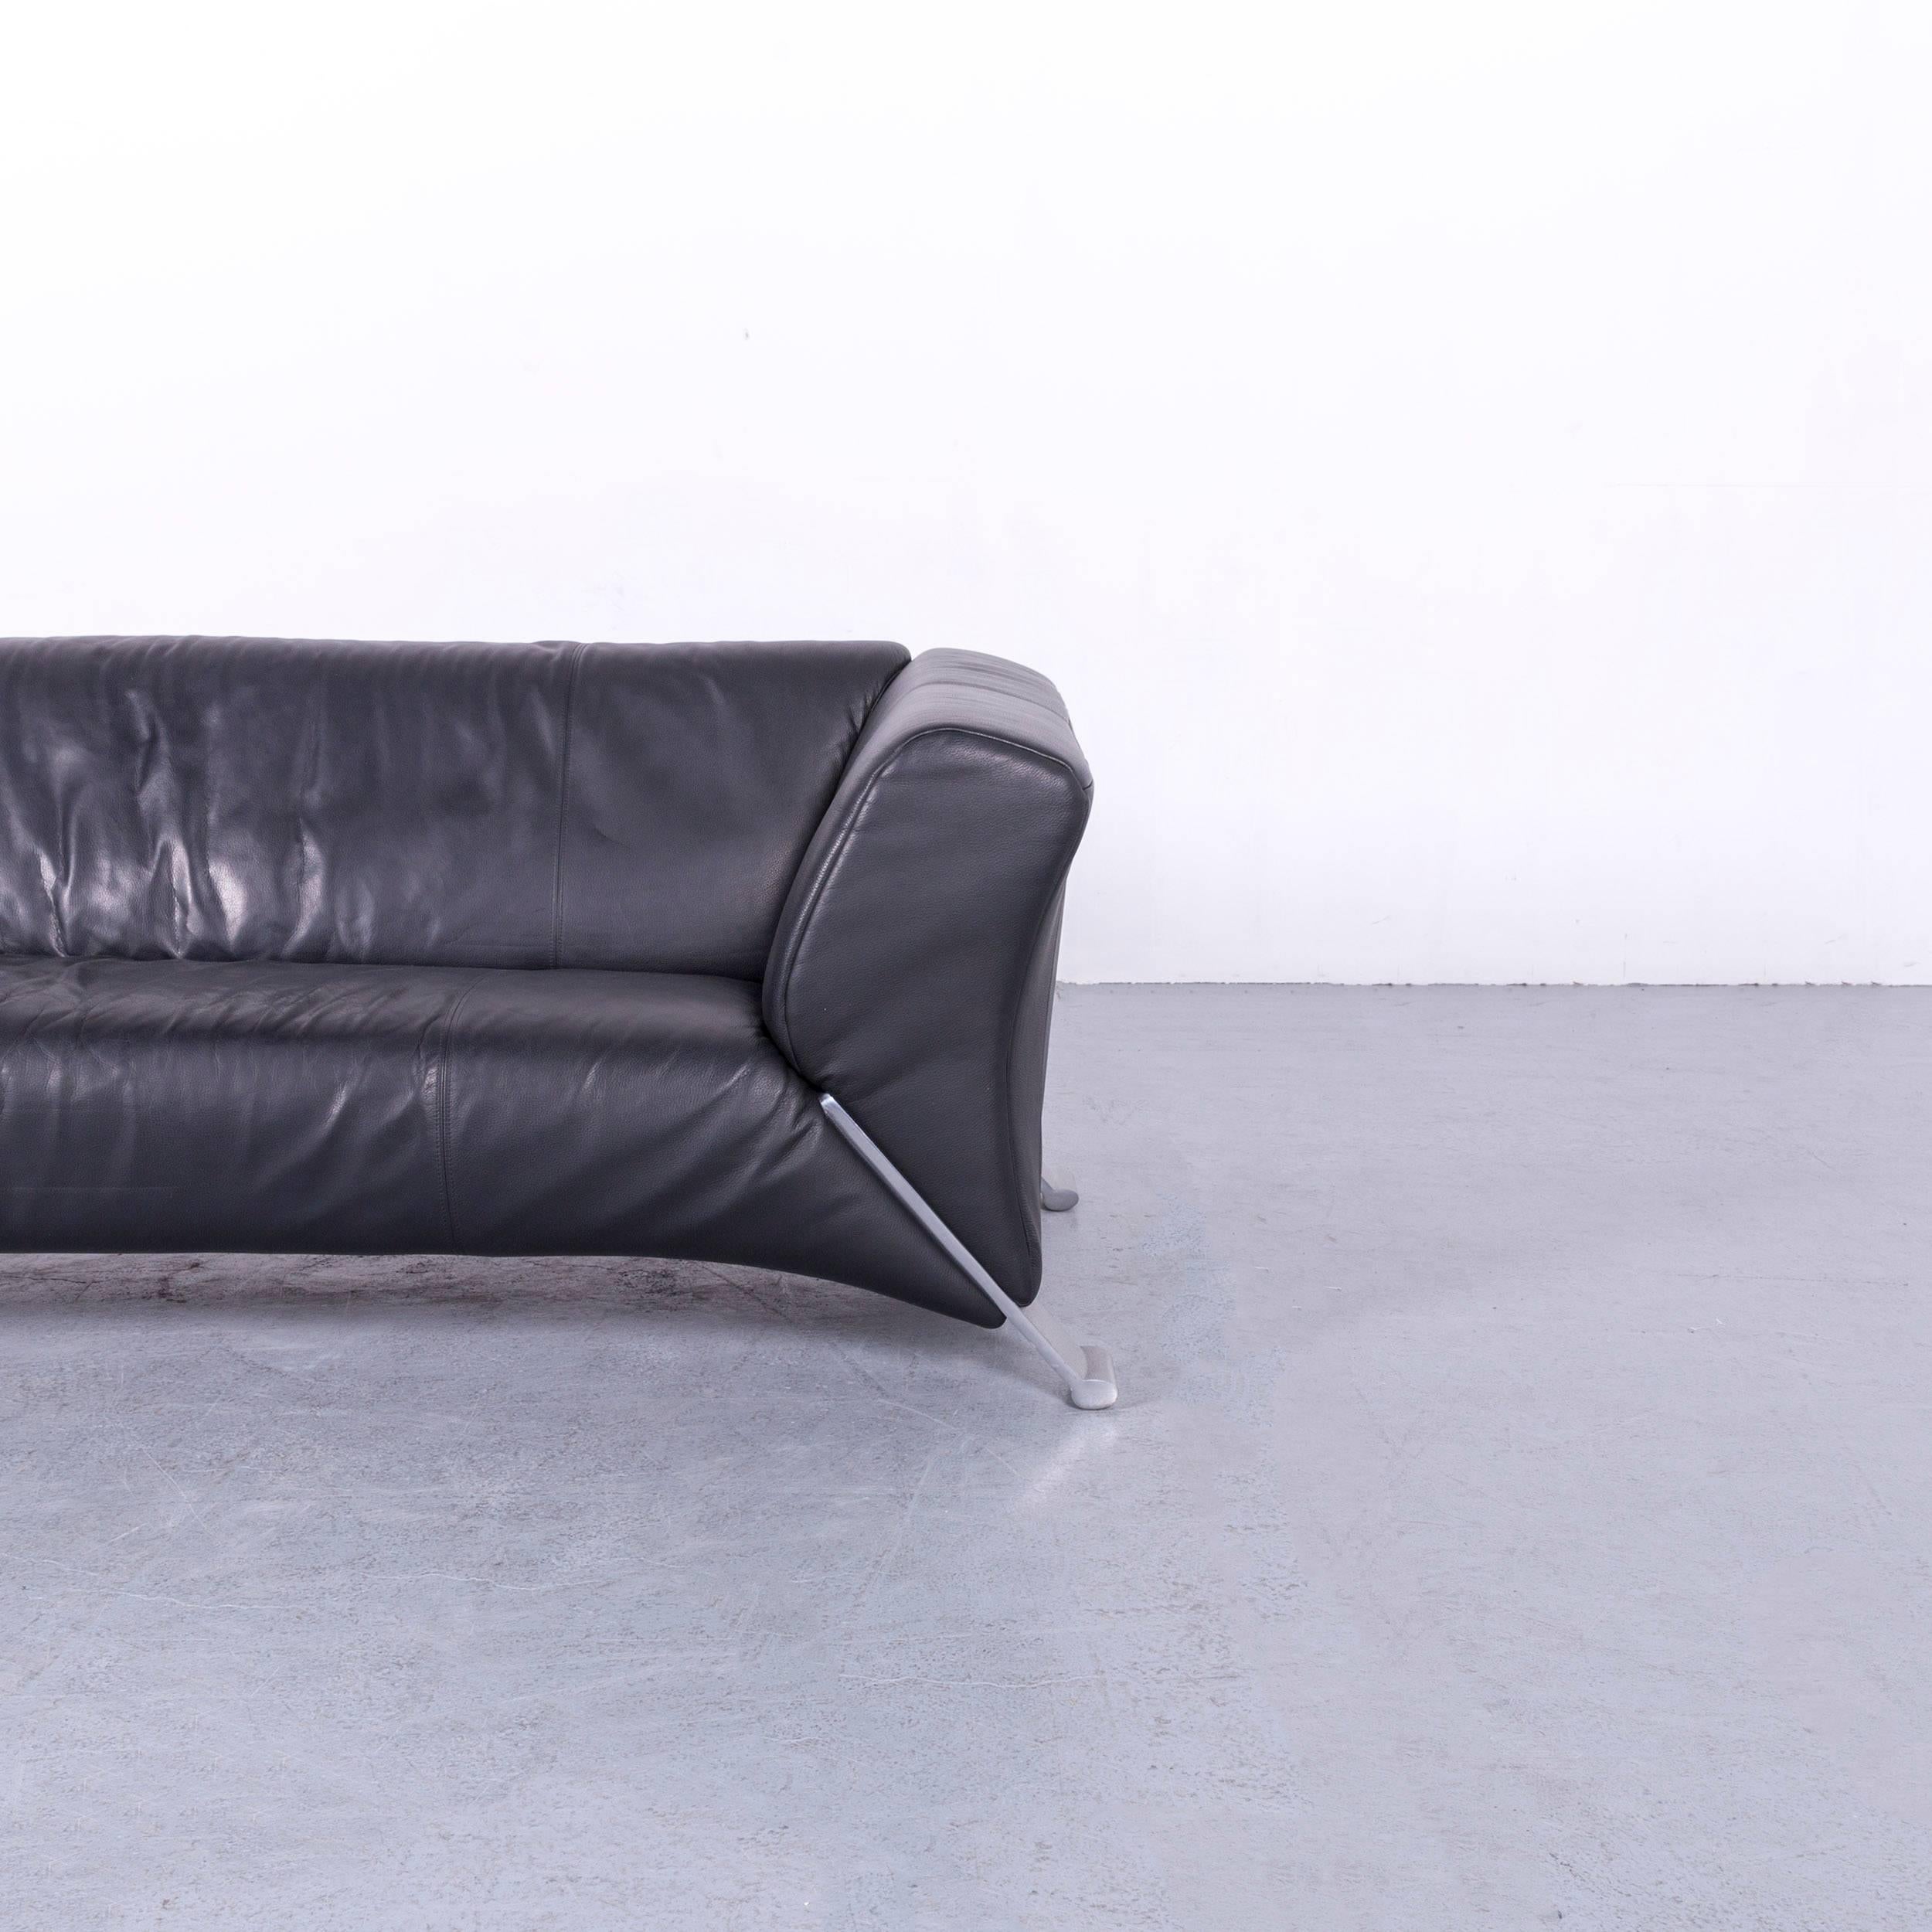 German Rolf Benz 322 Designer Sofa Black Three-Seat Leather Modern Couch Metal Feet